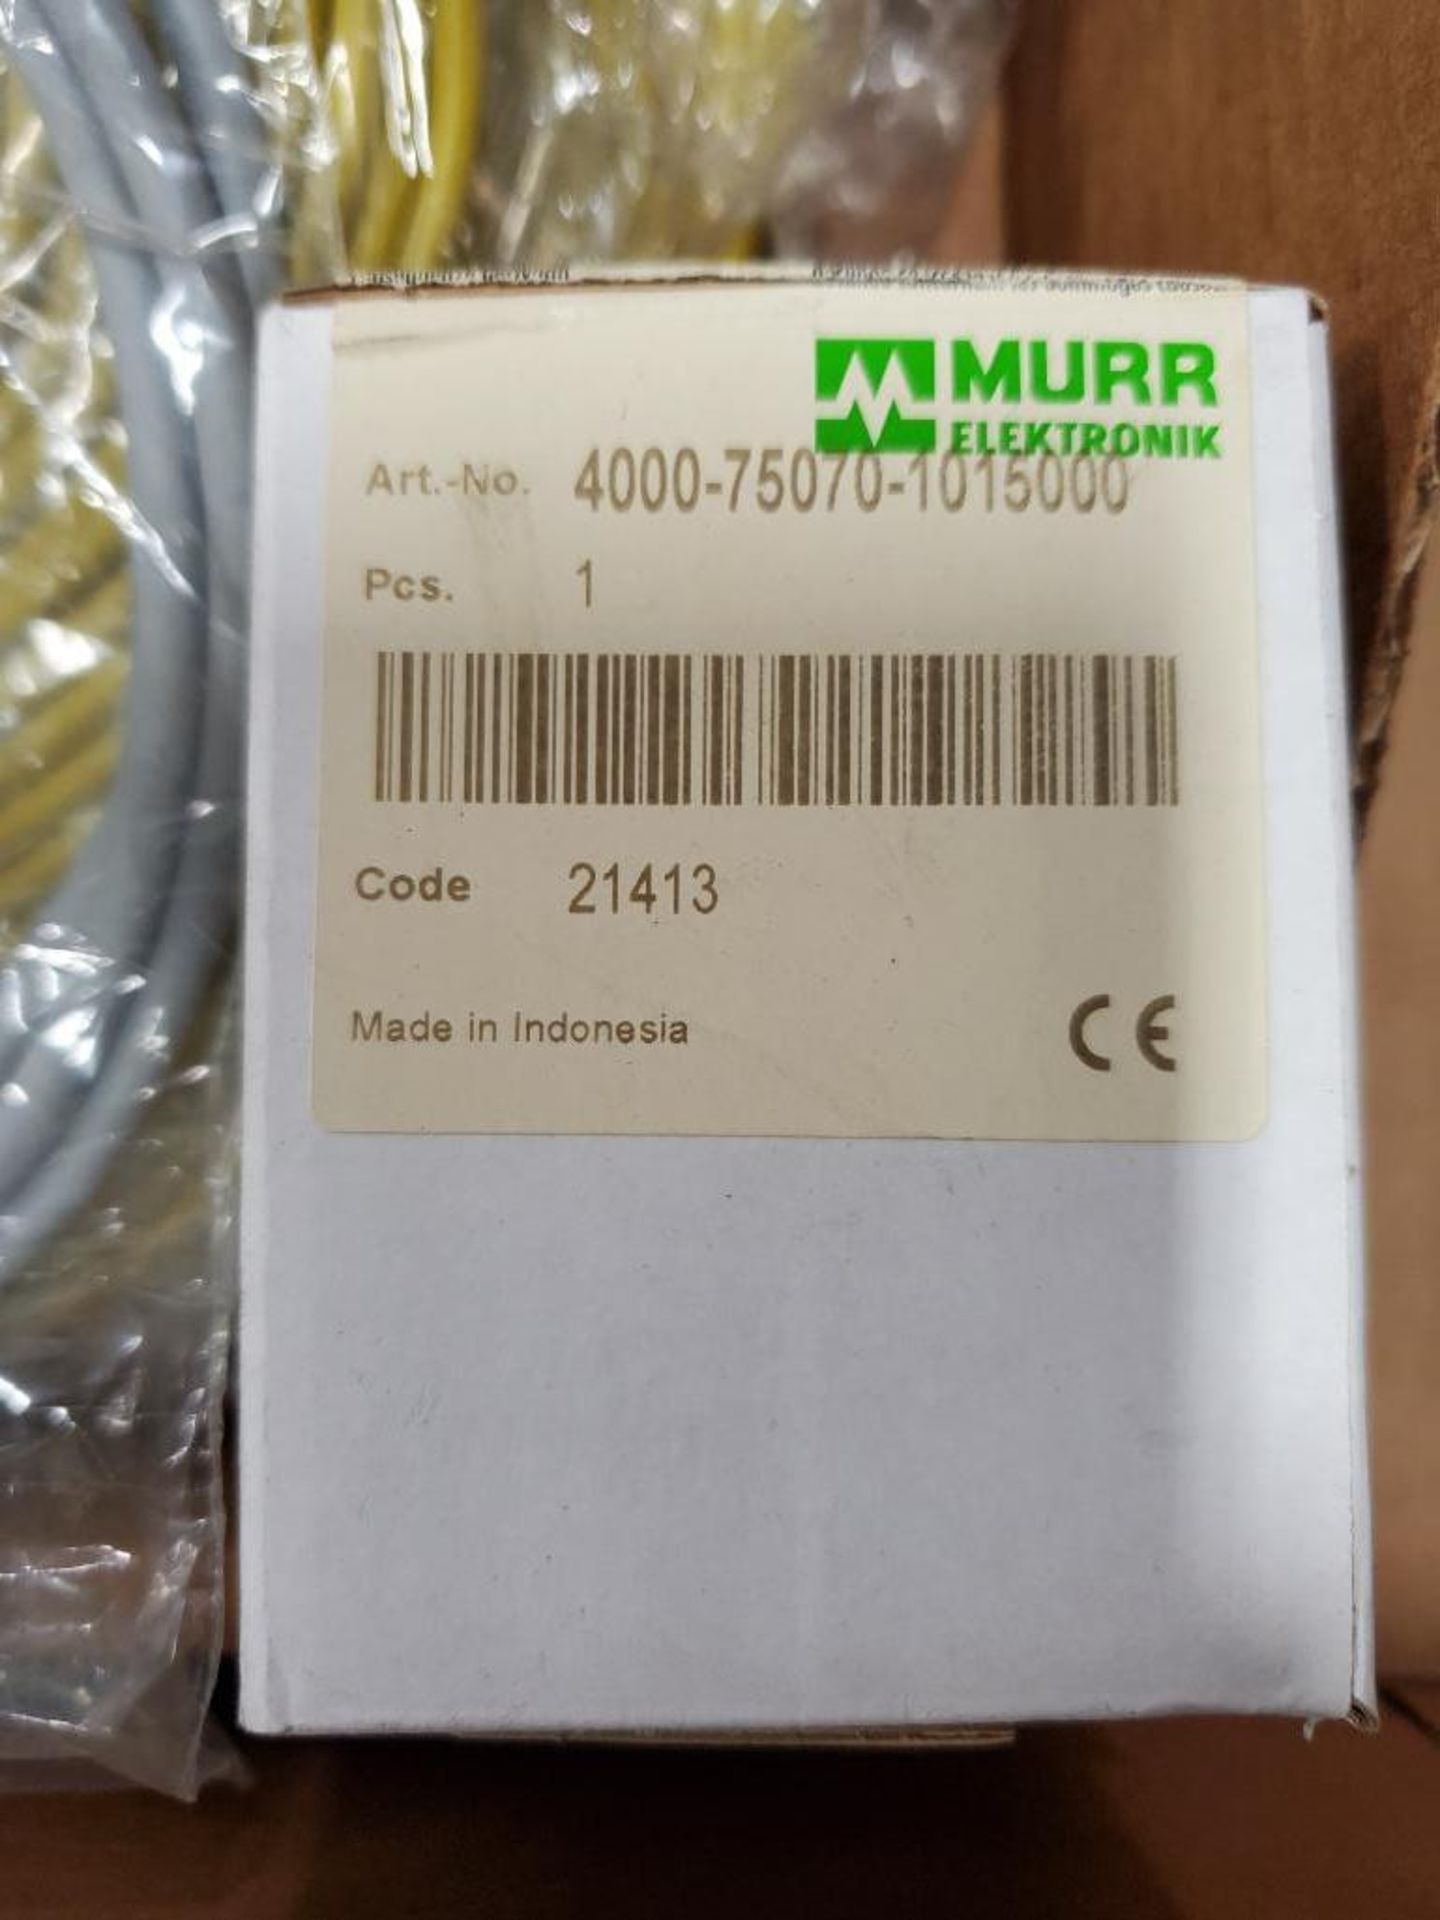 Assorted Murr Elektronik electrical. New in packaging. - Image 2 of 5